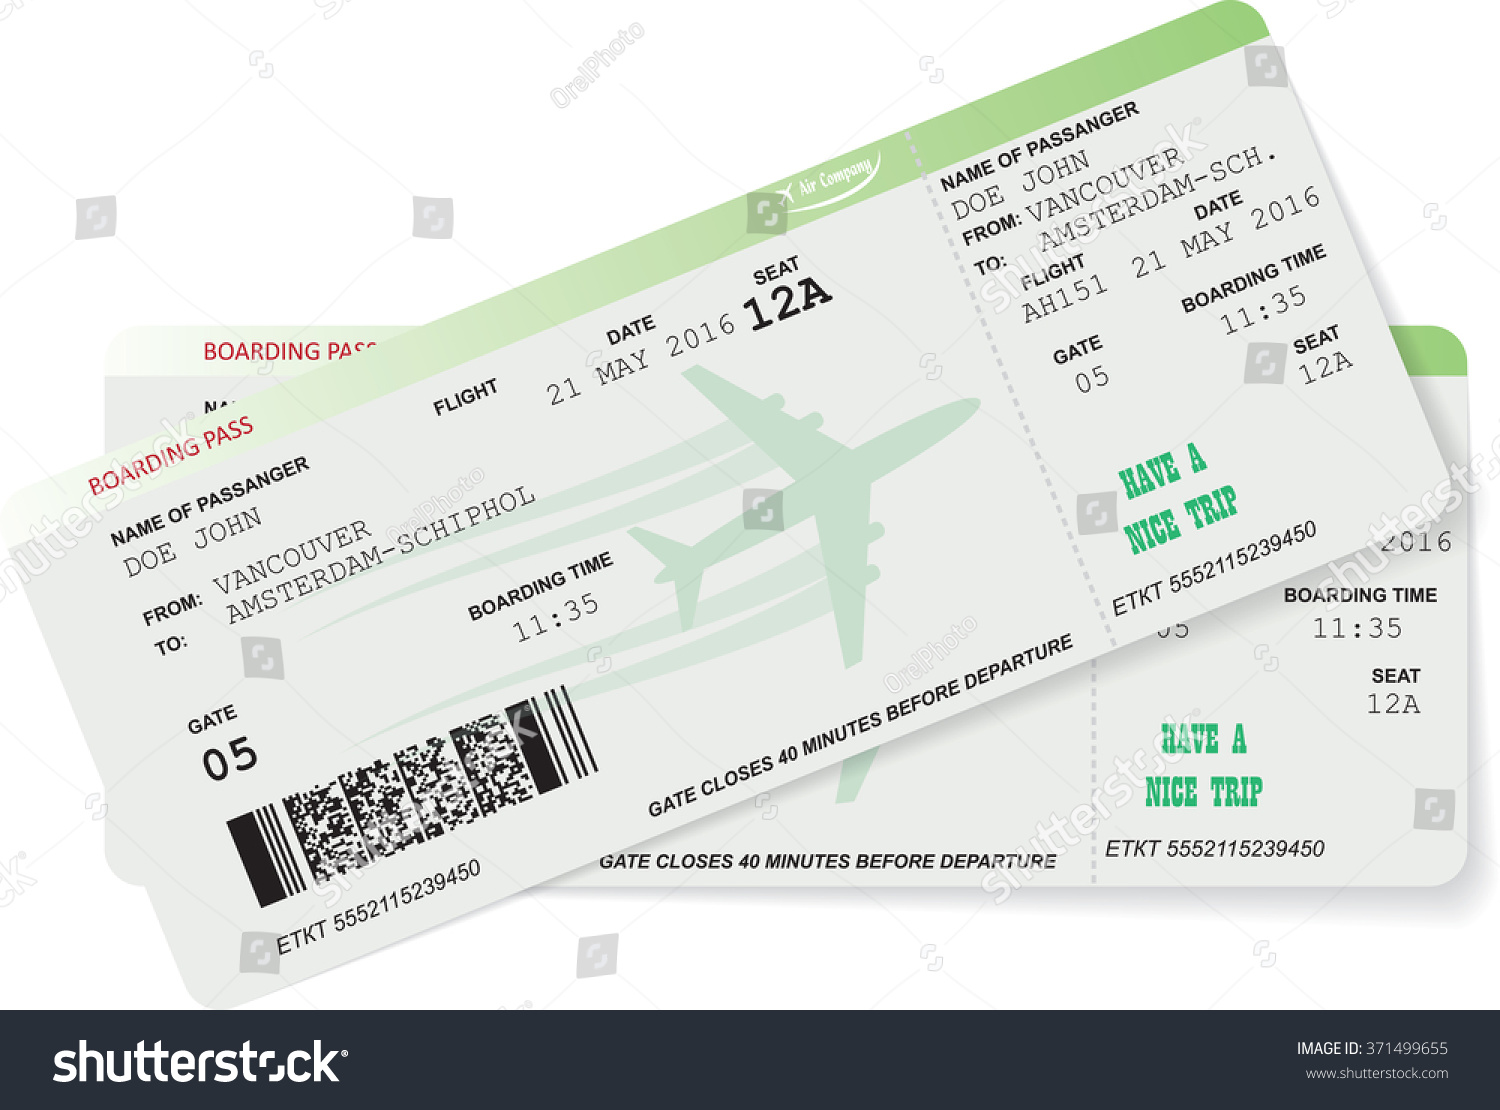 The cheapest tickets to the homecoming. Макет билета на самолет. Билеты на самолет без фона. Билет на самолет рисунок. Красивый билет на самолет.